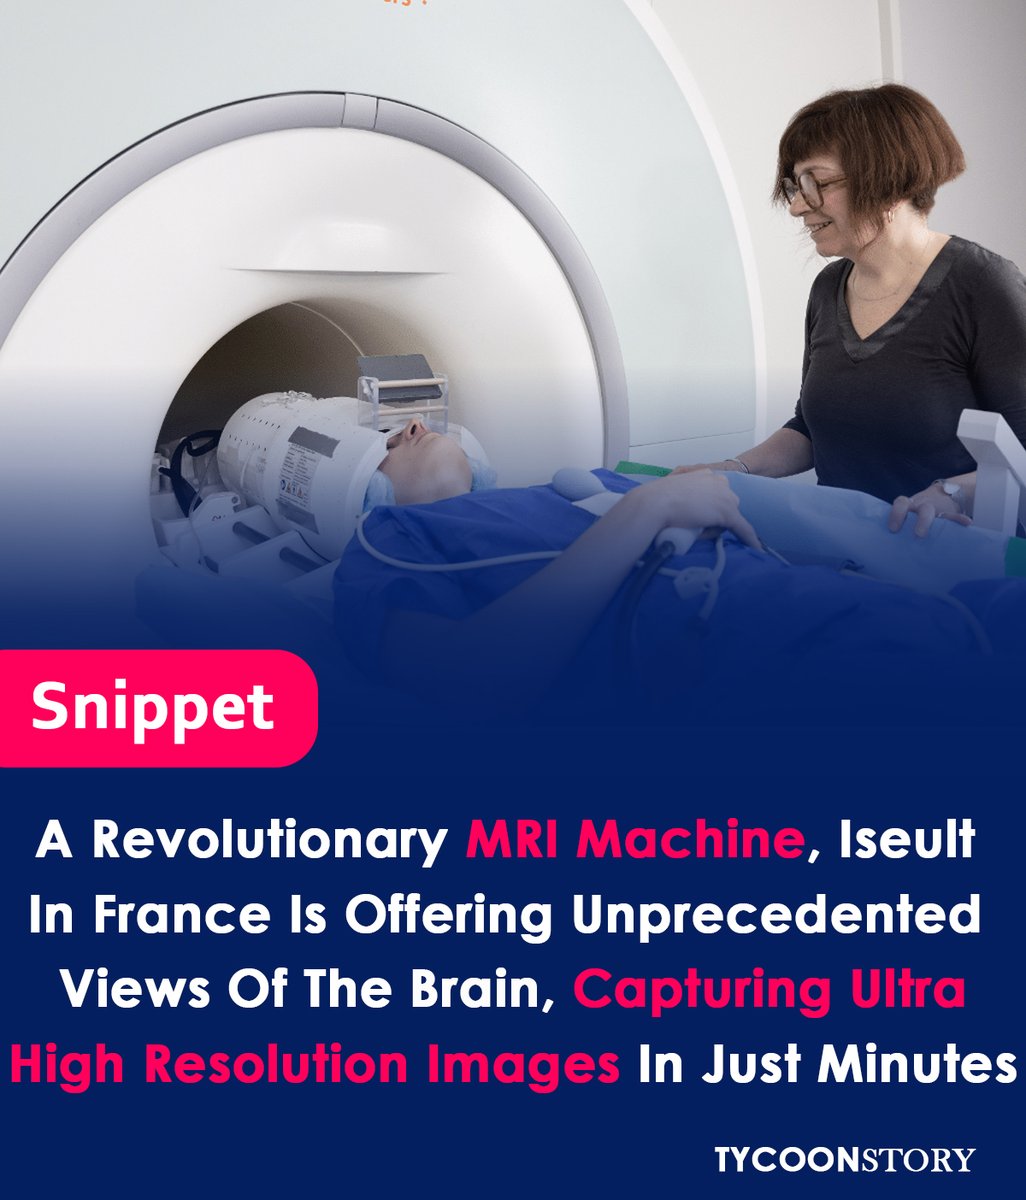 New MRI machine captures brain in minutes, offering a revolutionary view.
#BrainScan #MedicalTech #MRI #Neuroscience #Alzheimers #ParkinsonsDisease #Breakthrough #Consciousness #SuperMRI #FutureofMedicine @CEA_Leti